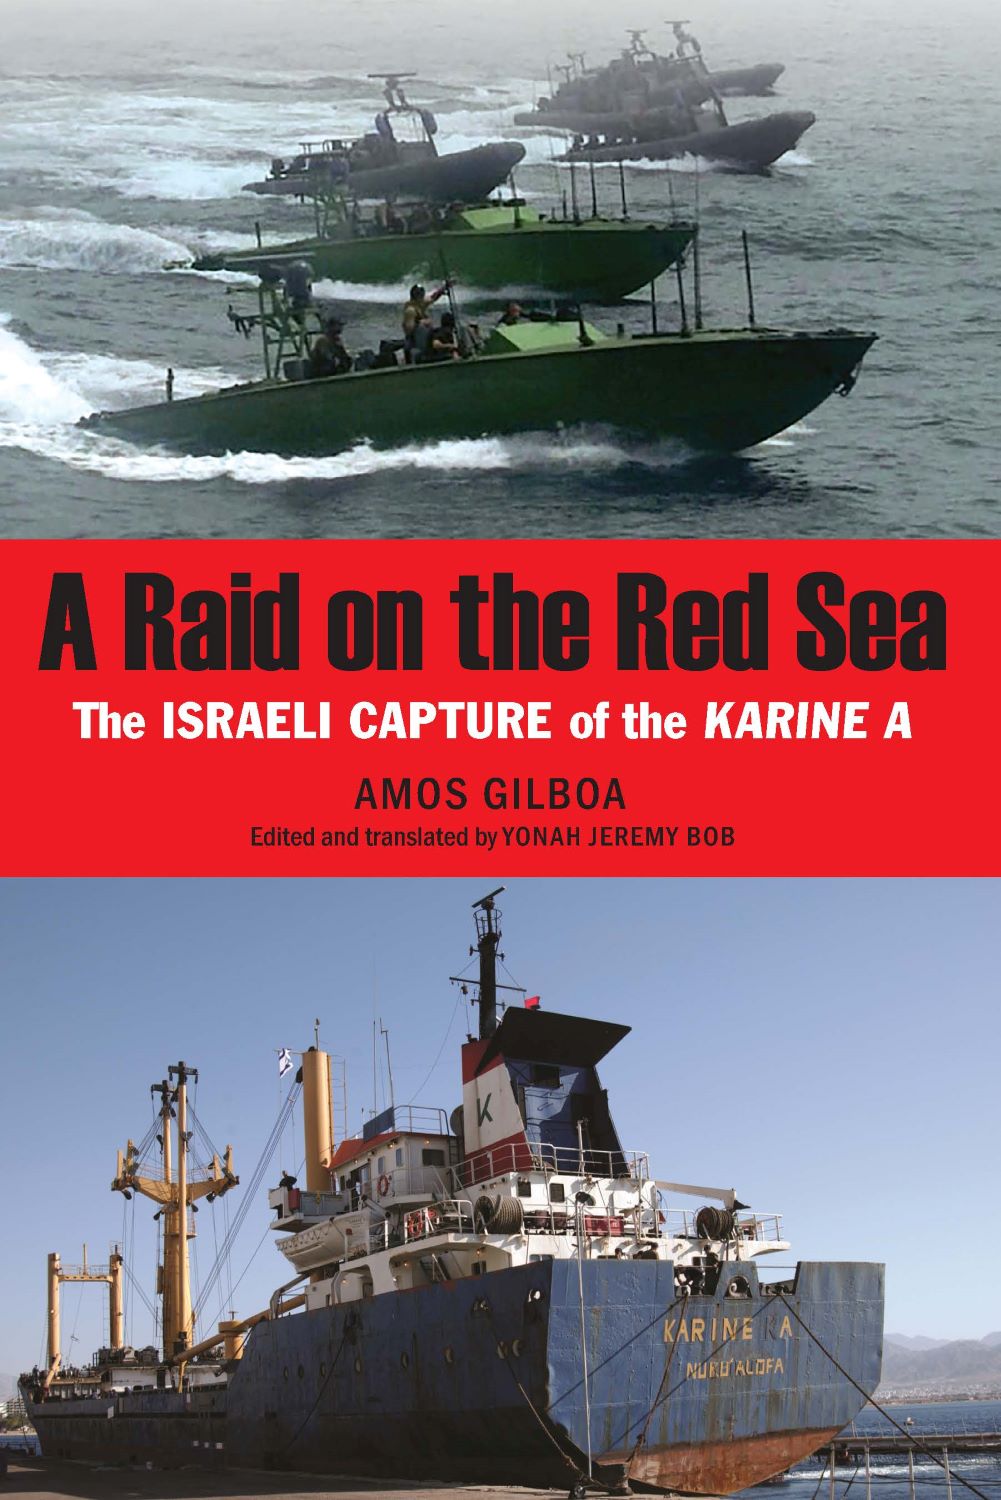 A Raid on the Red Sea by Amos Gilboa